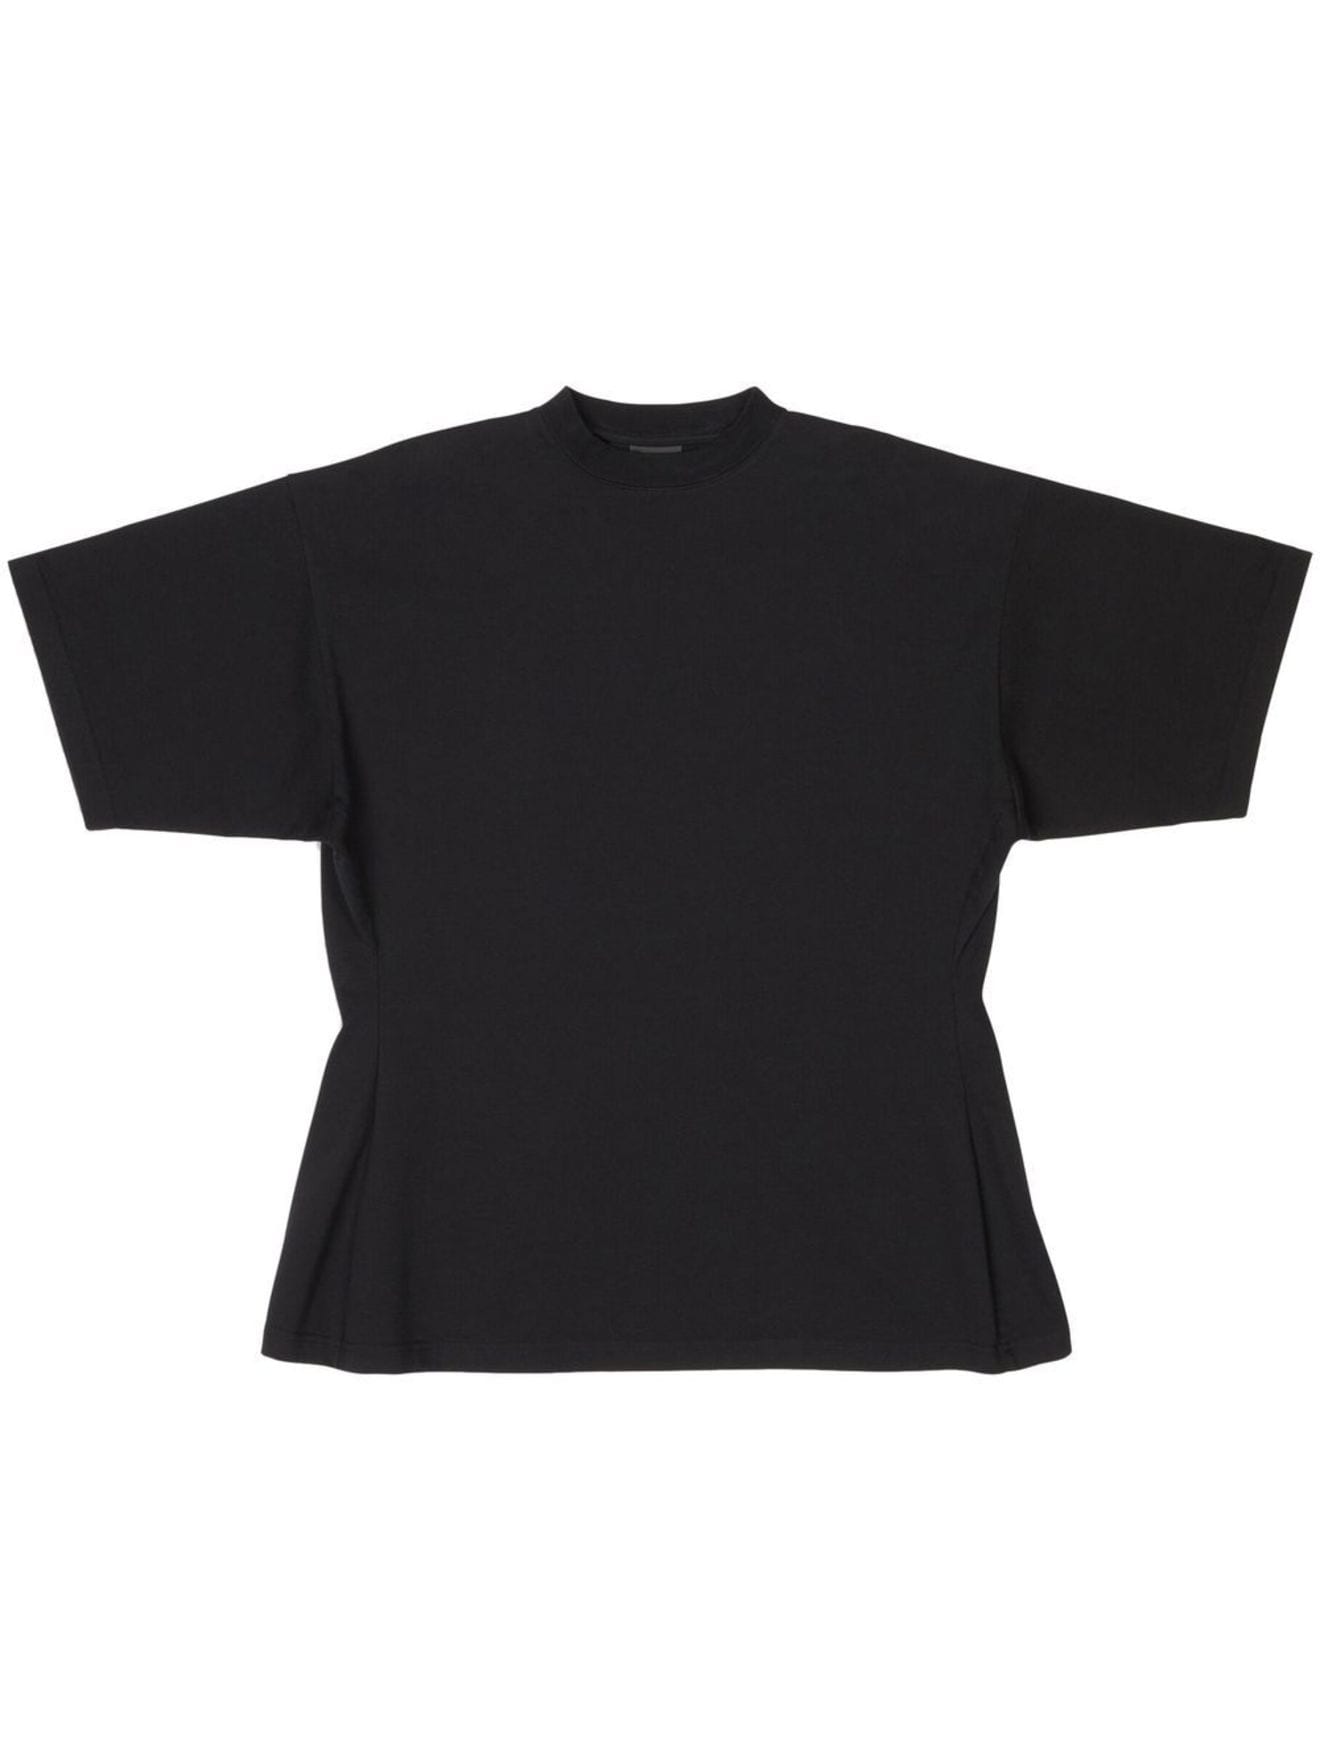 Balenciaga cinched-waist oversize T-shirt black | MODES